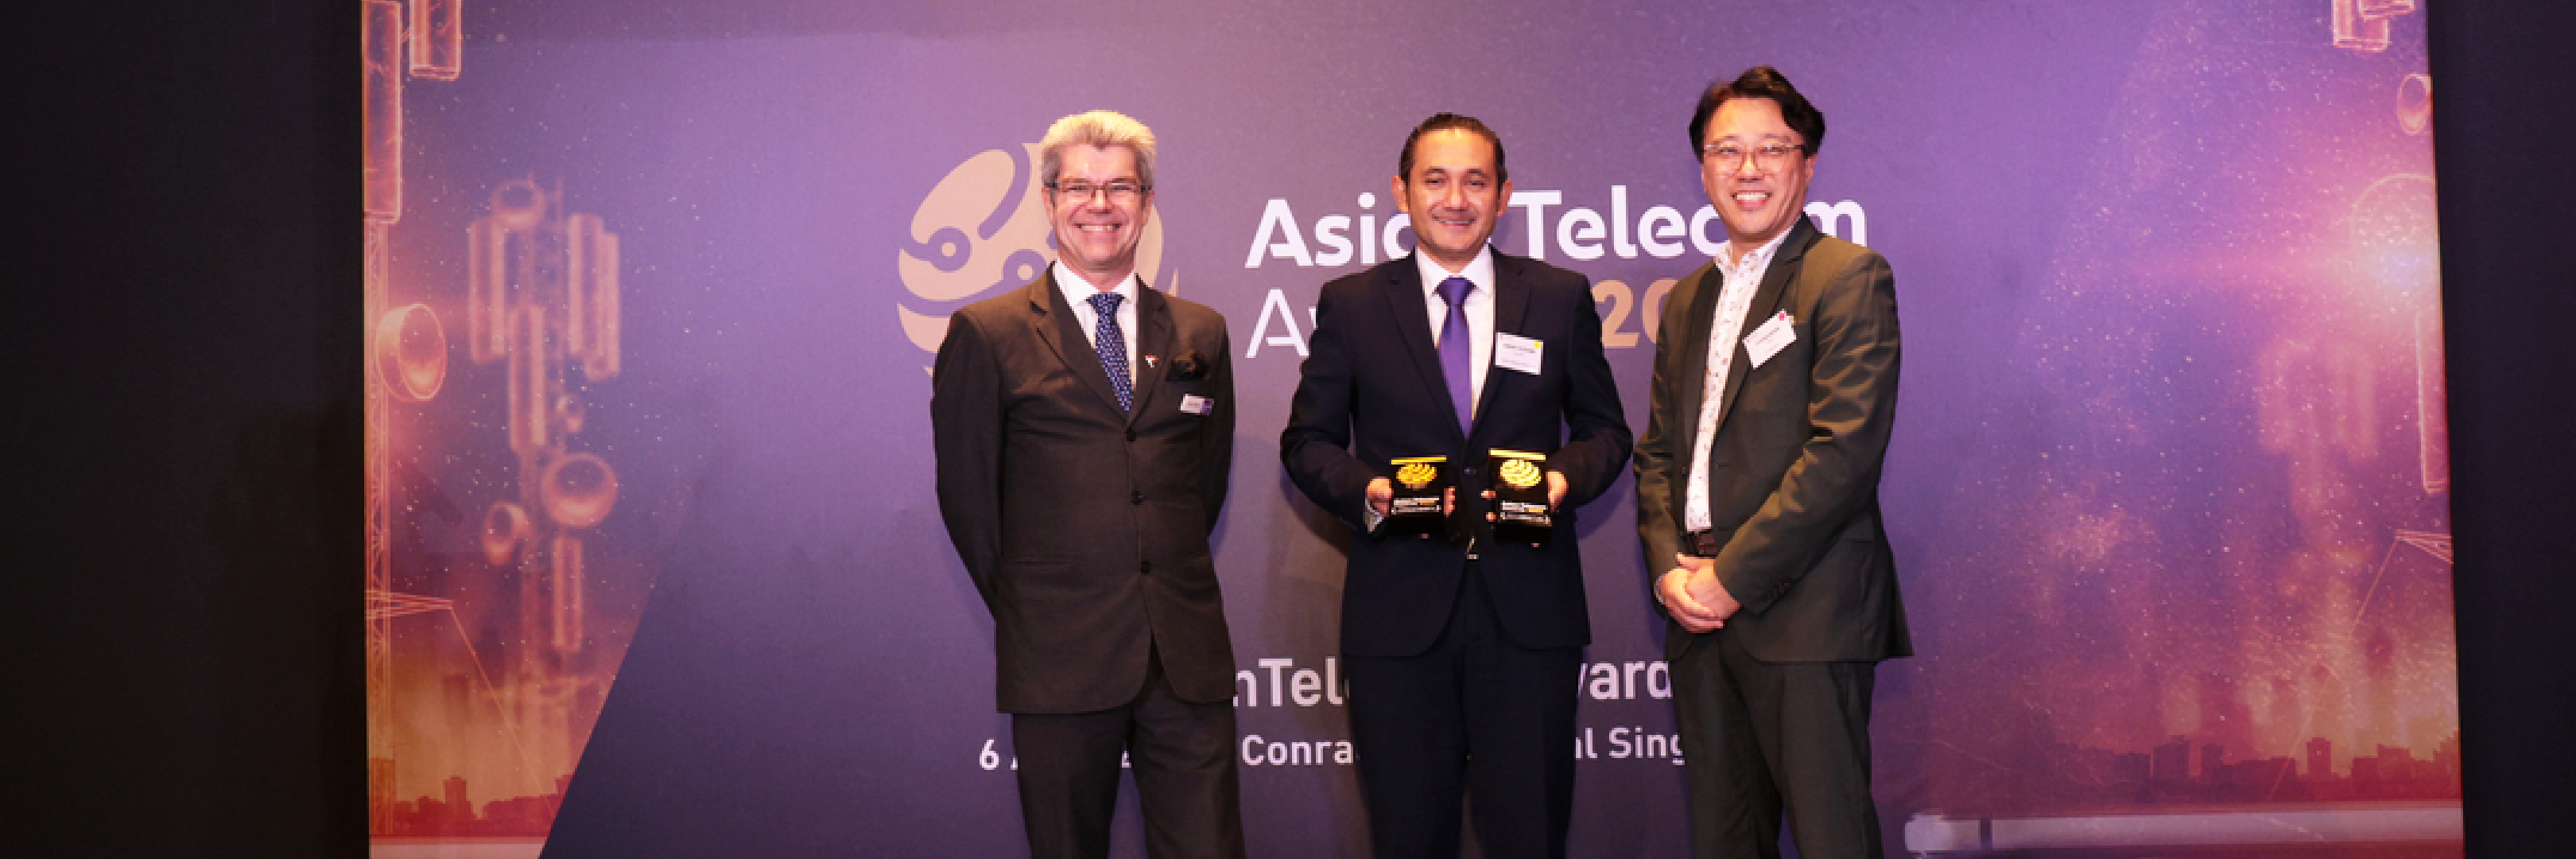 Asian-Telecom-Awards 1